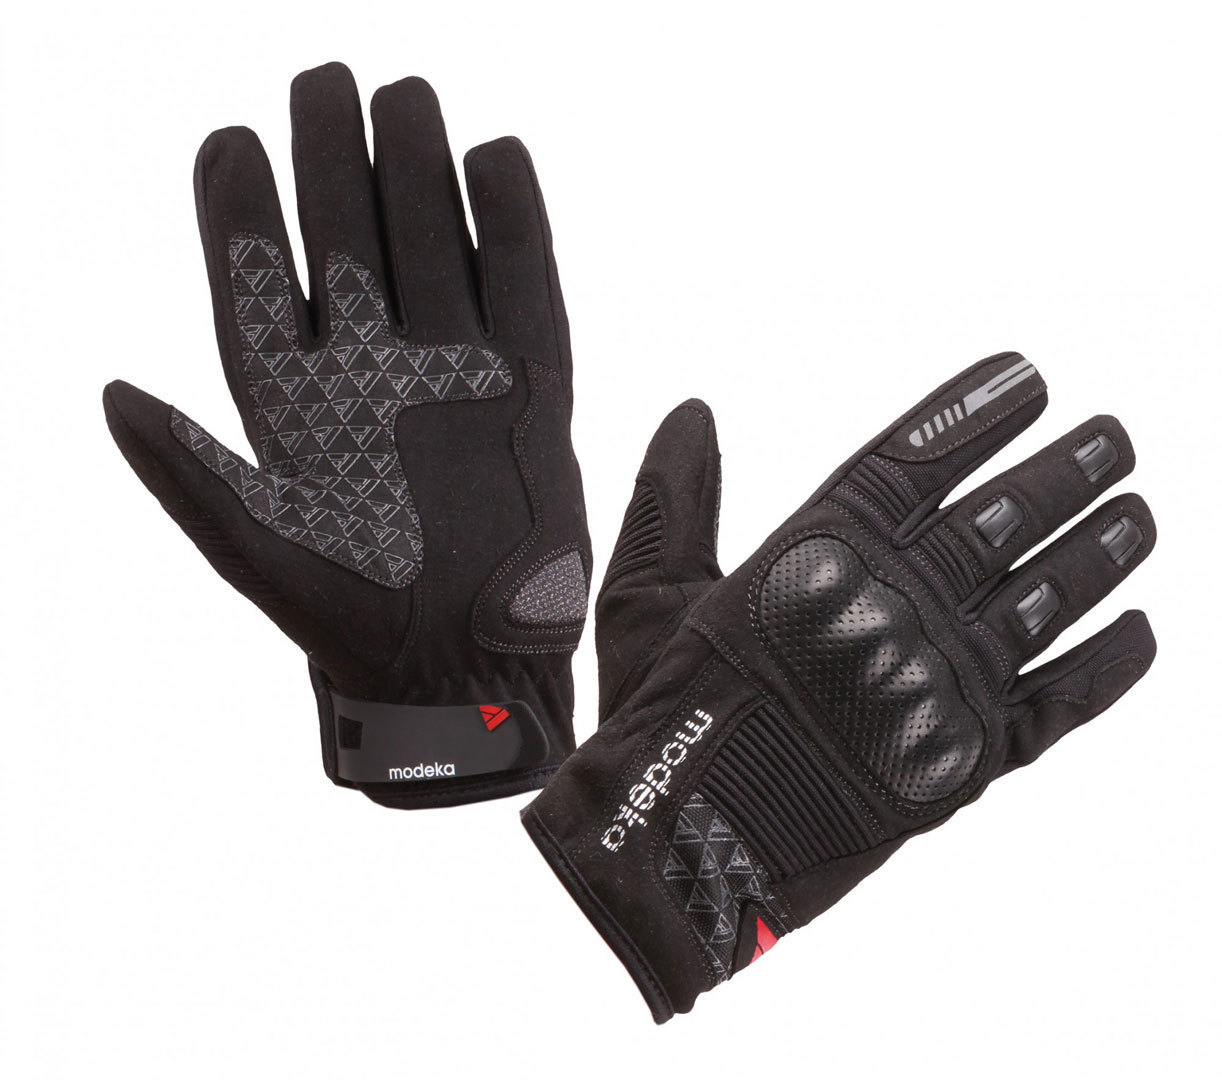 Modeka Fuego Handschuhe, schwarz, Gre S M, schwarz, Gre S M